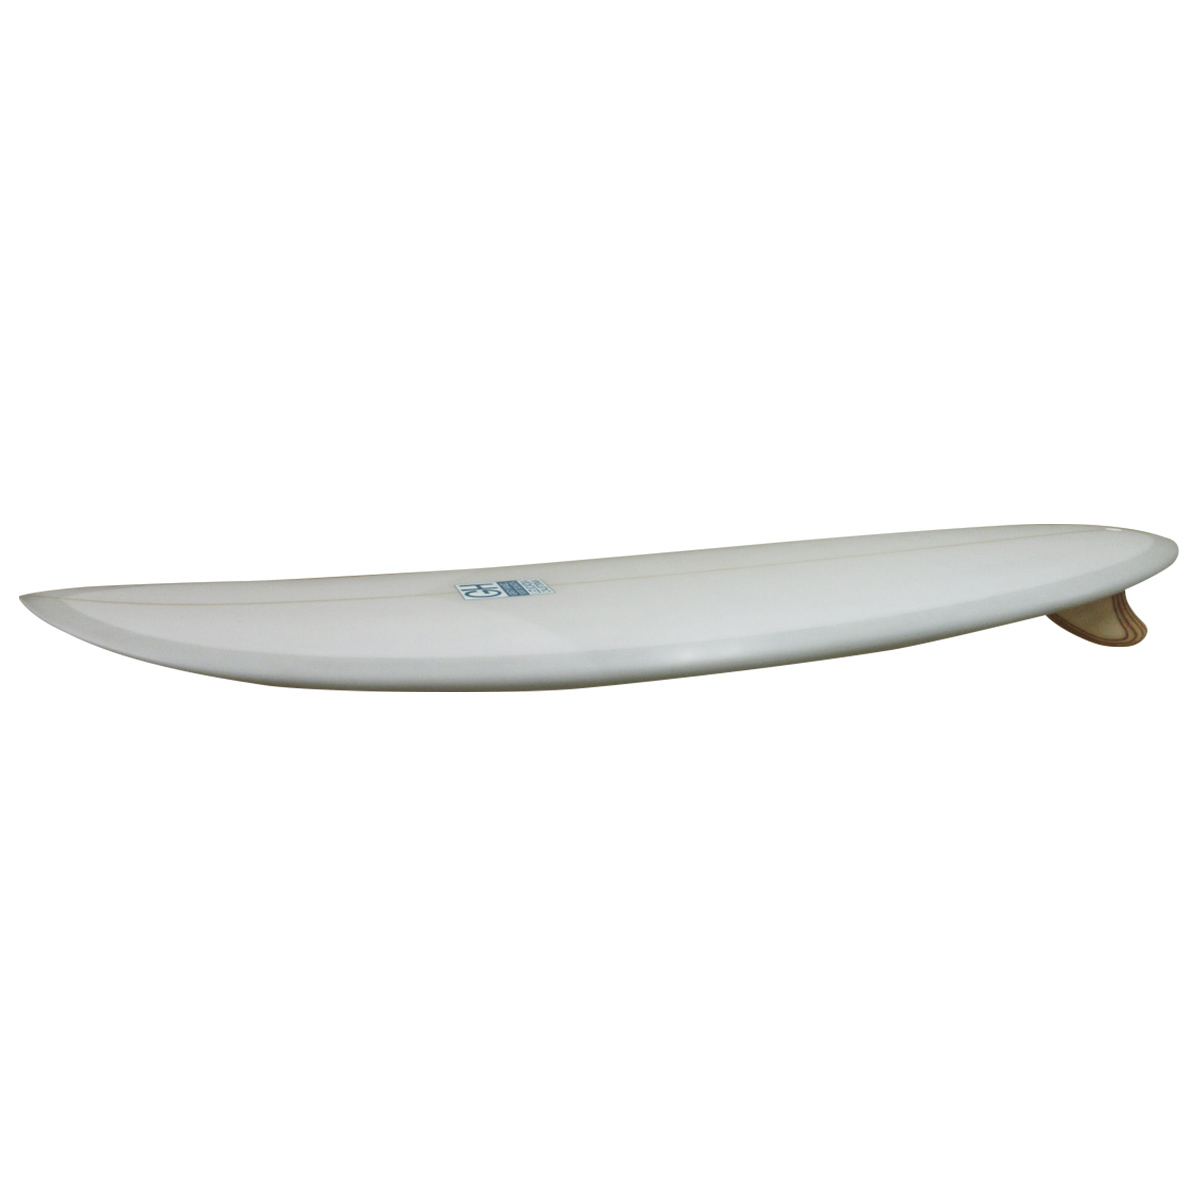 Gary Hanel Surfboards : PILL TWIN 5`10